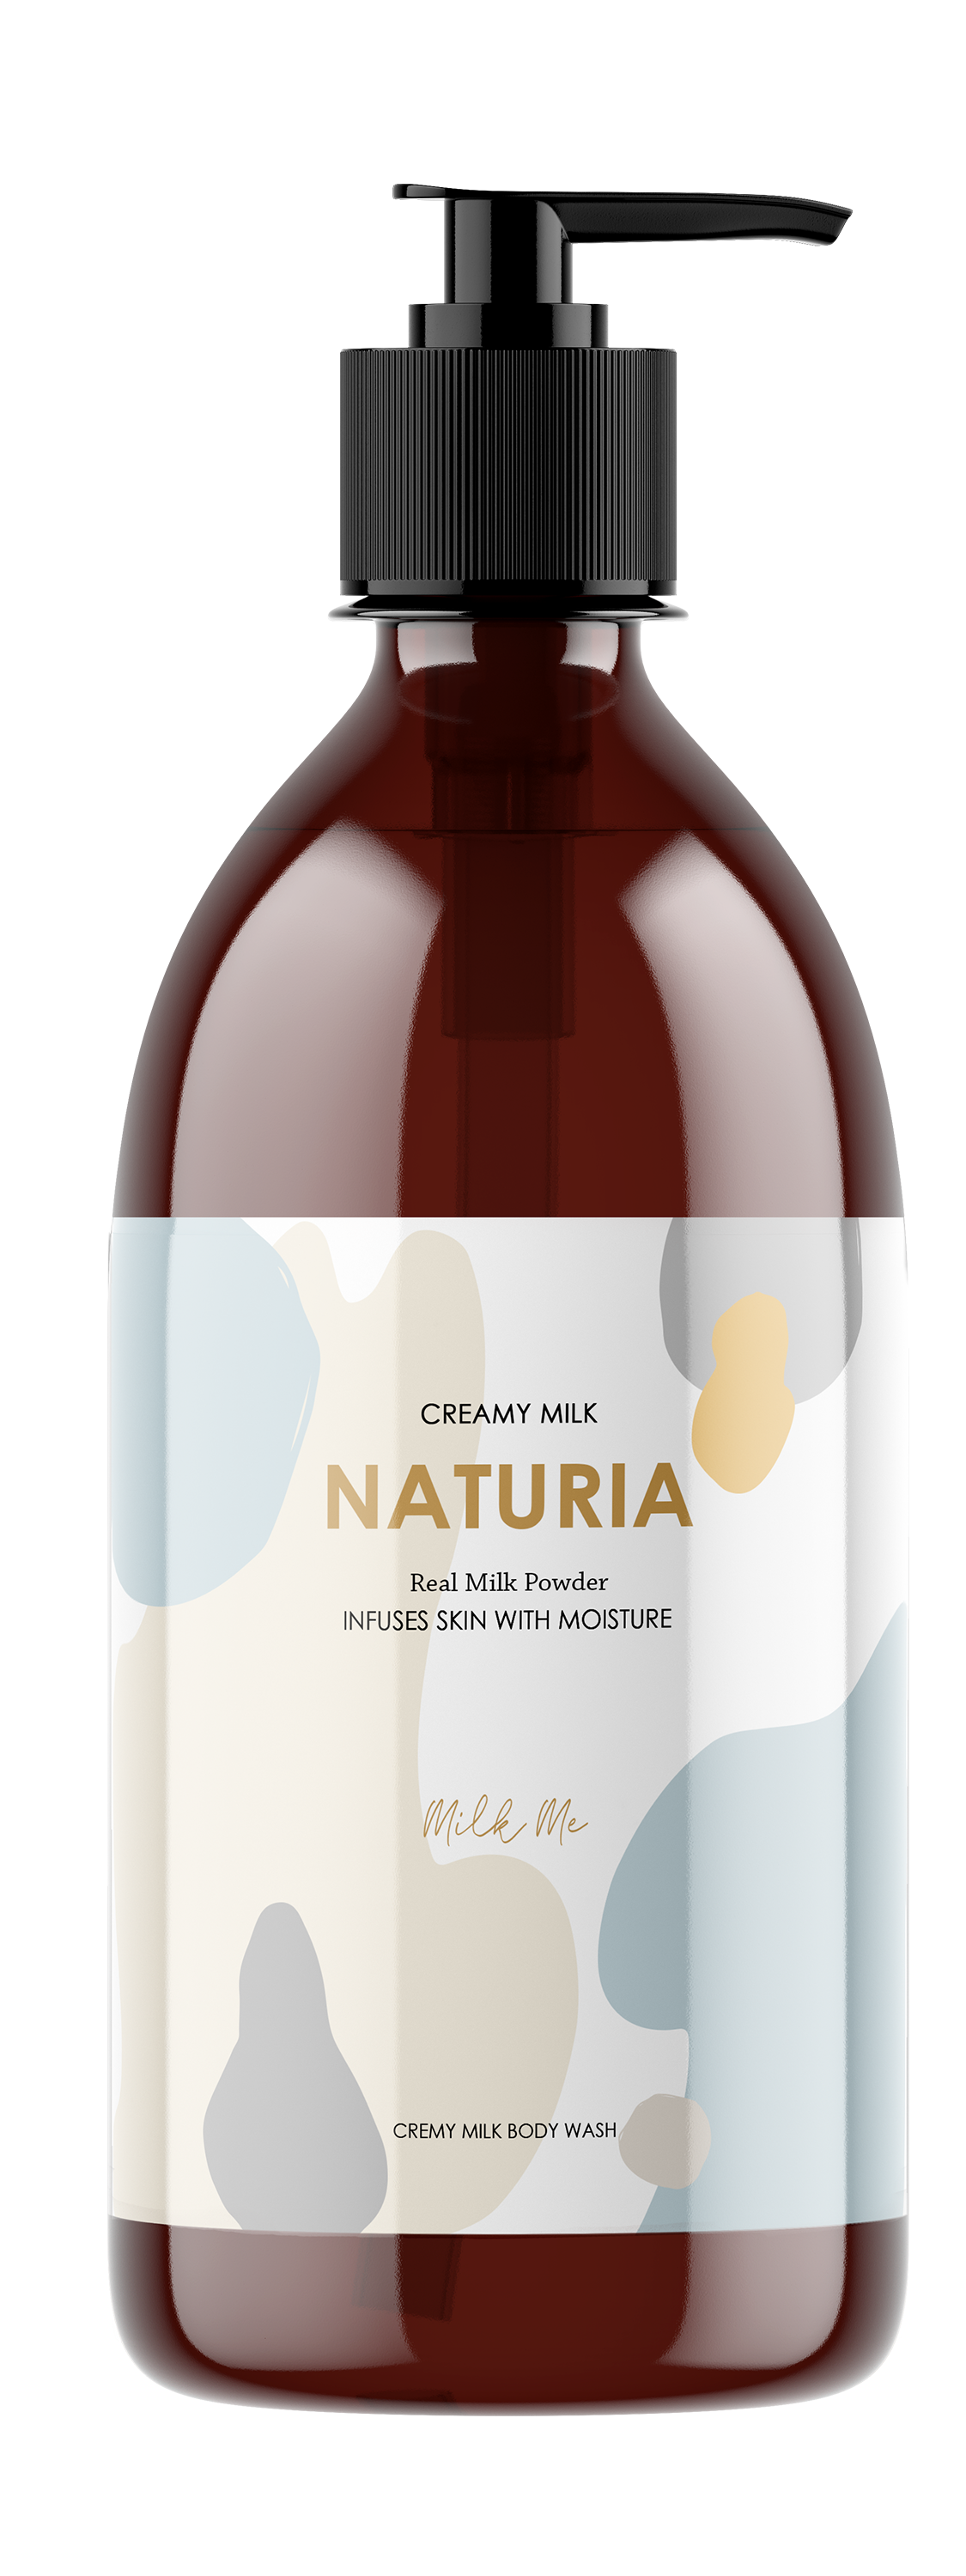 Evas Naturia Creamy Milk Body Wash - Milk me Гель для душа c молочным ароматом, 750мл